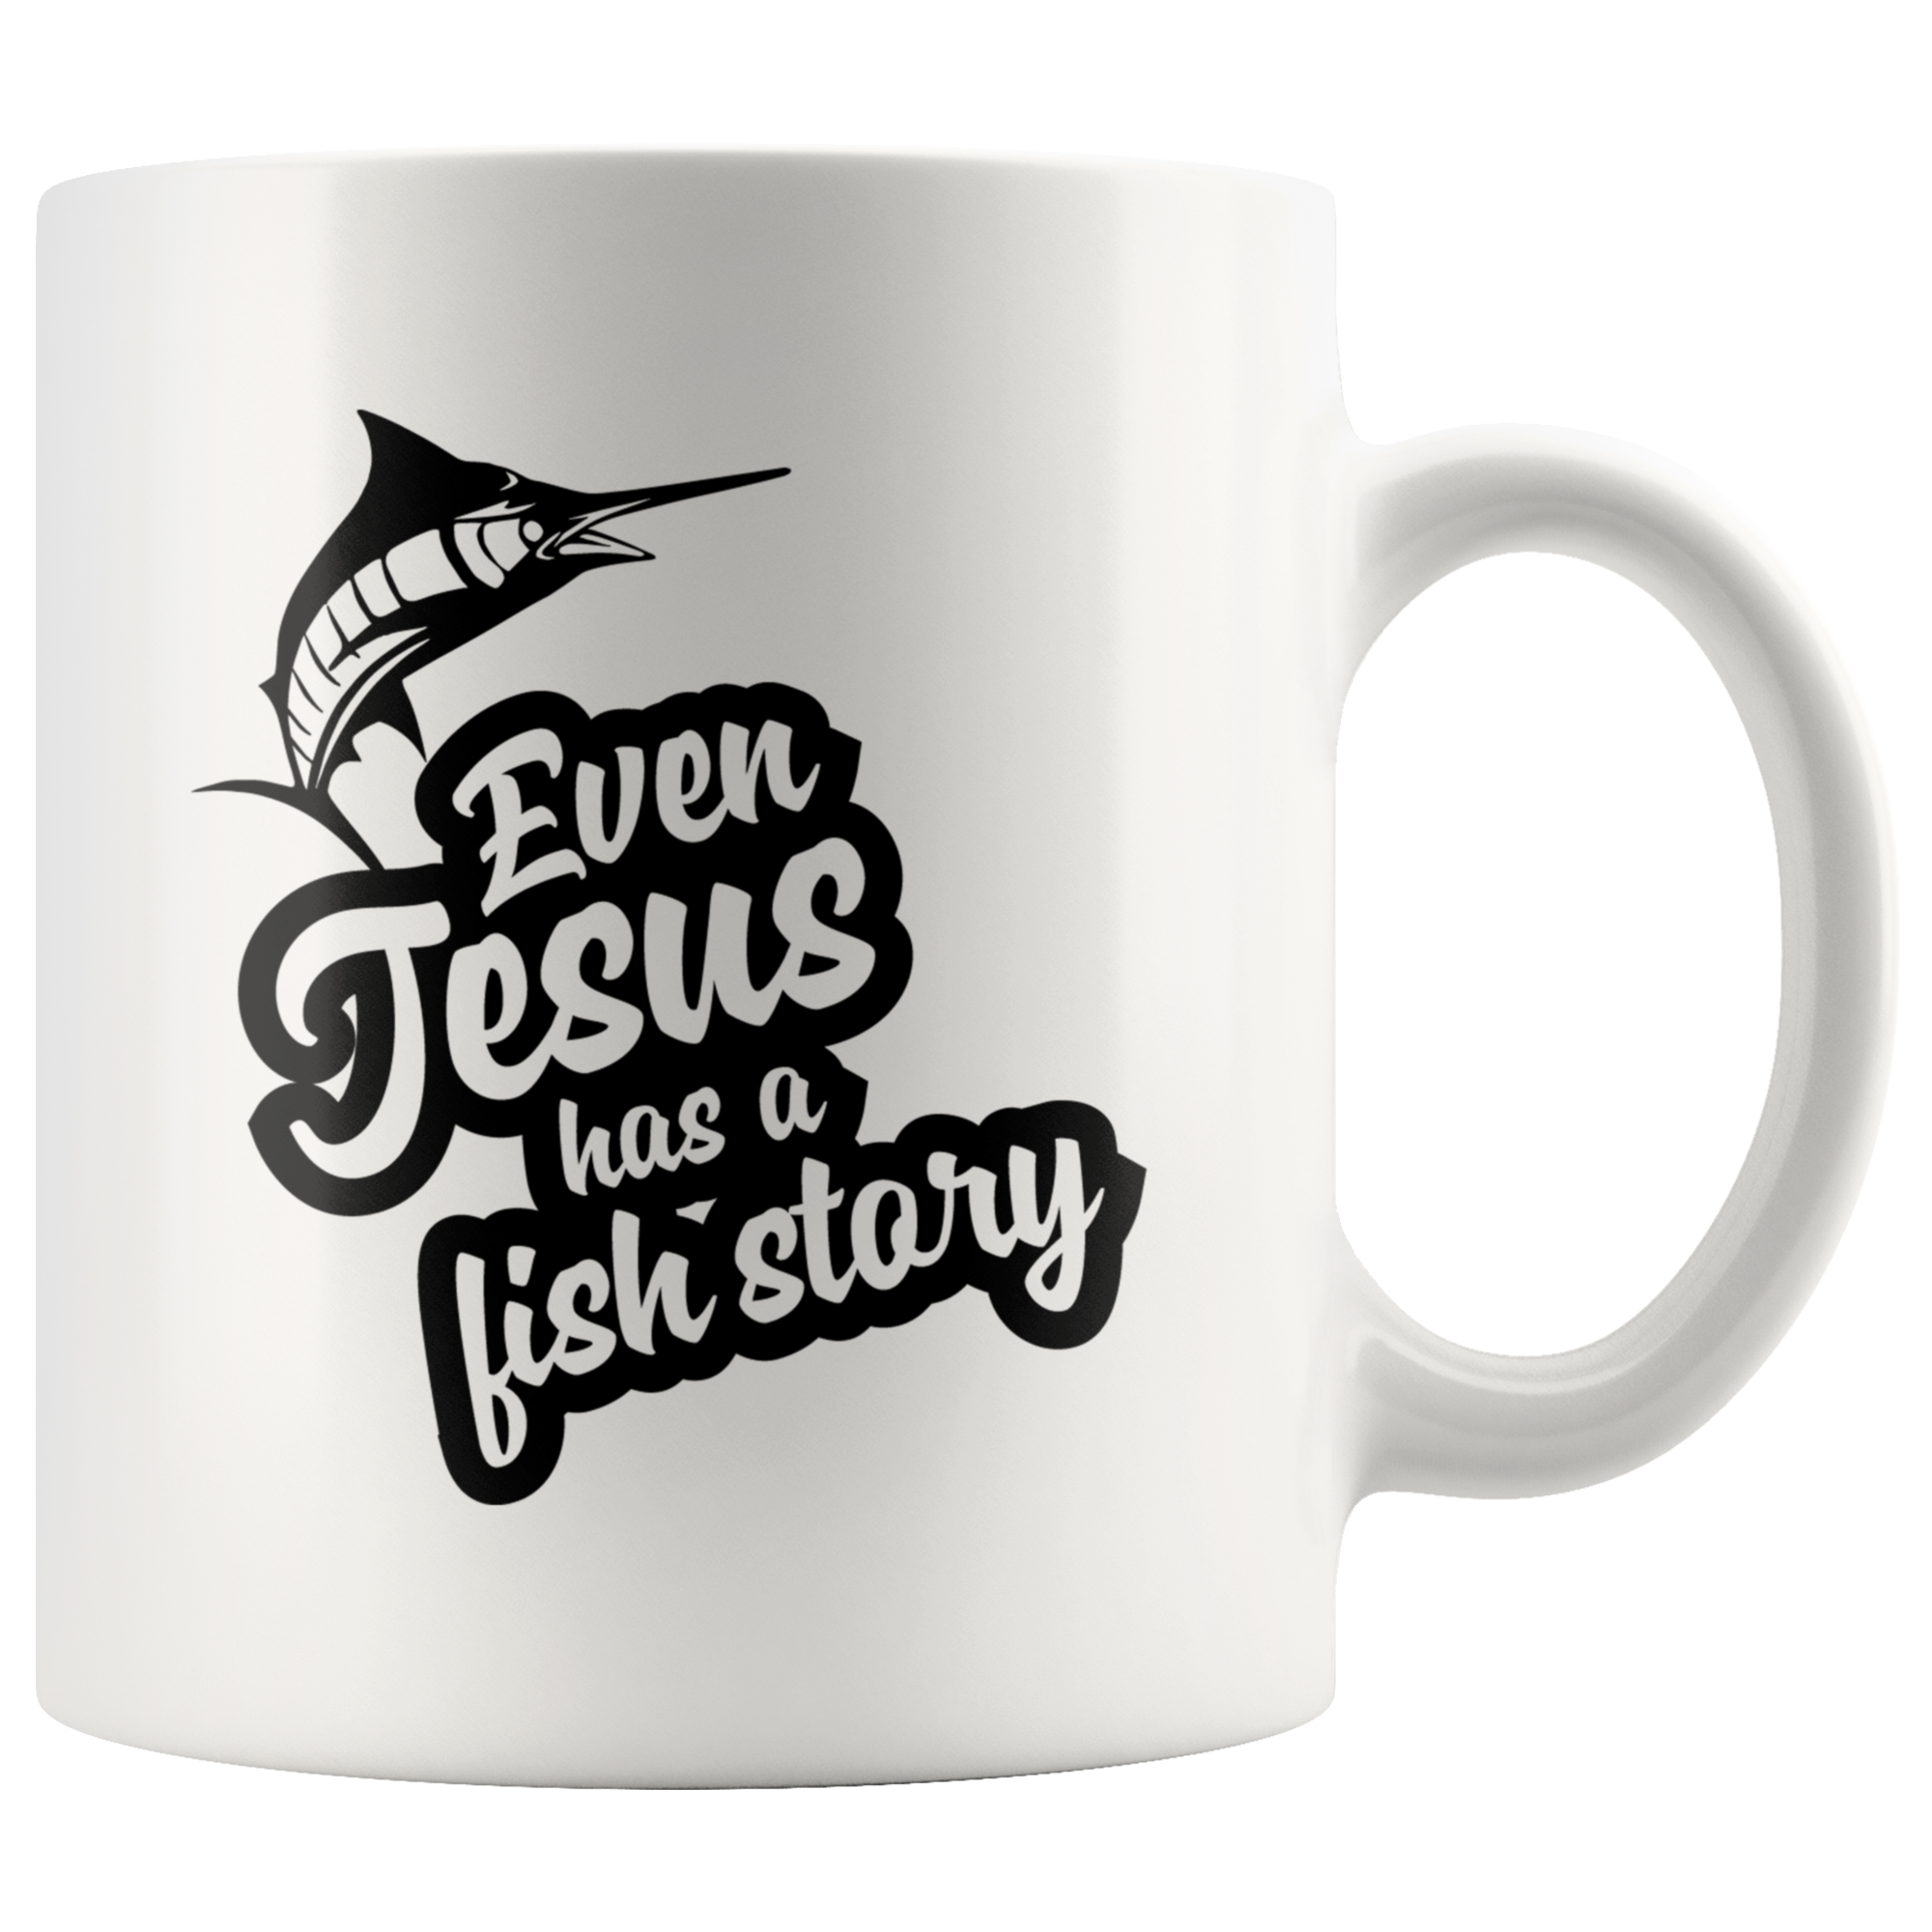 Even Jesus Has A Fish Story - 11 oz